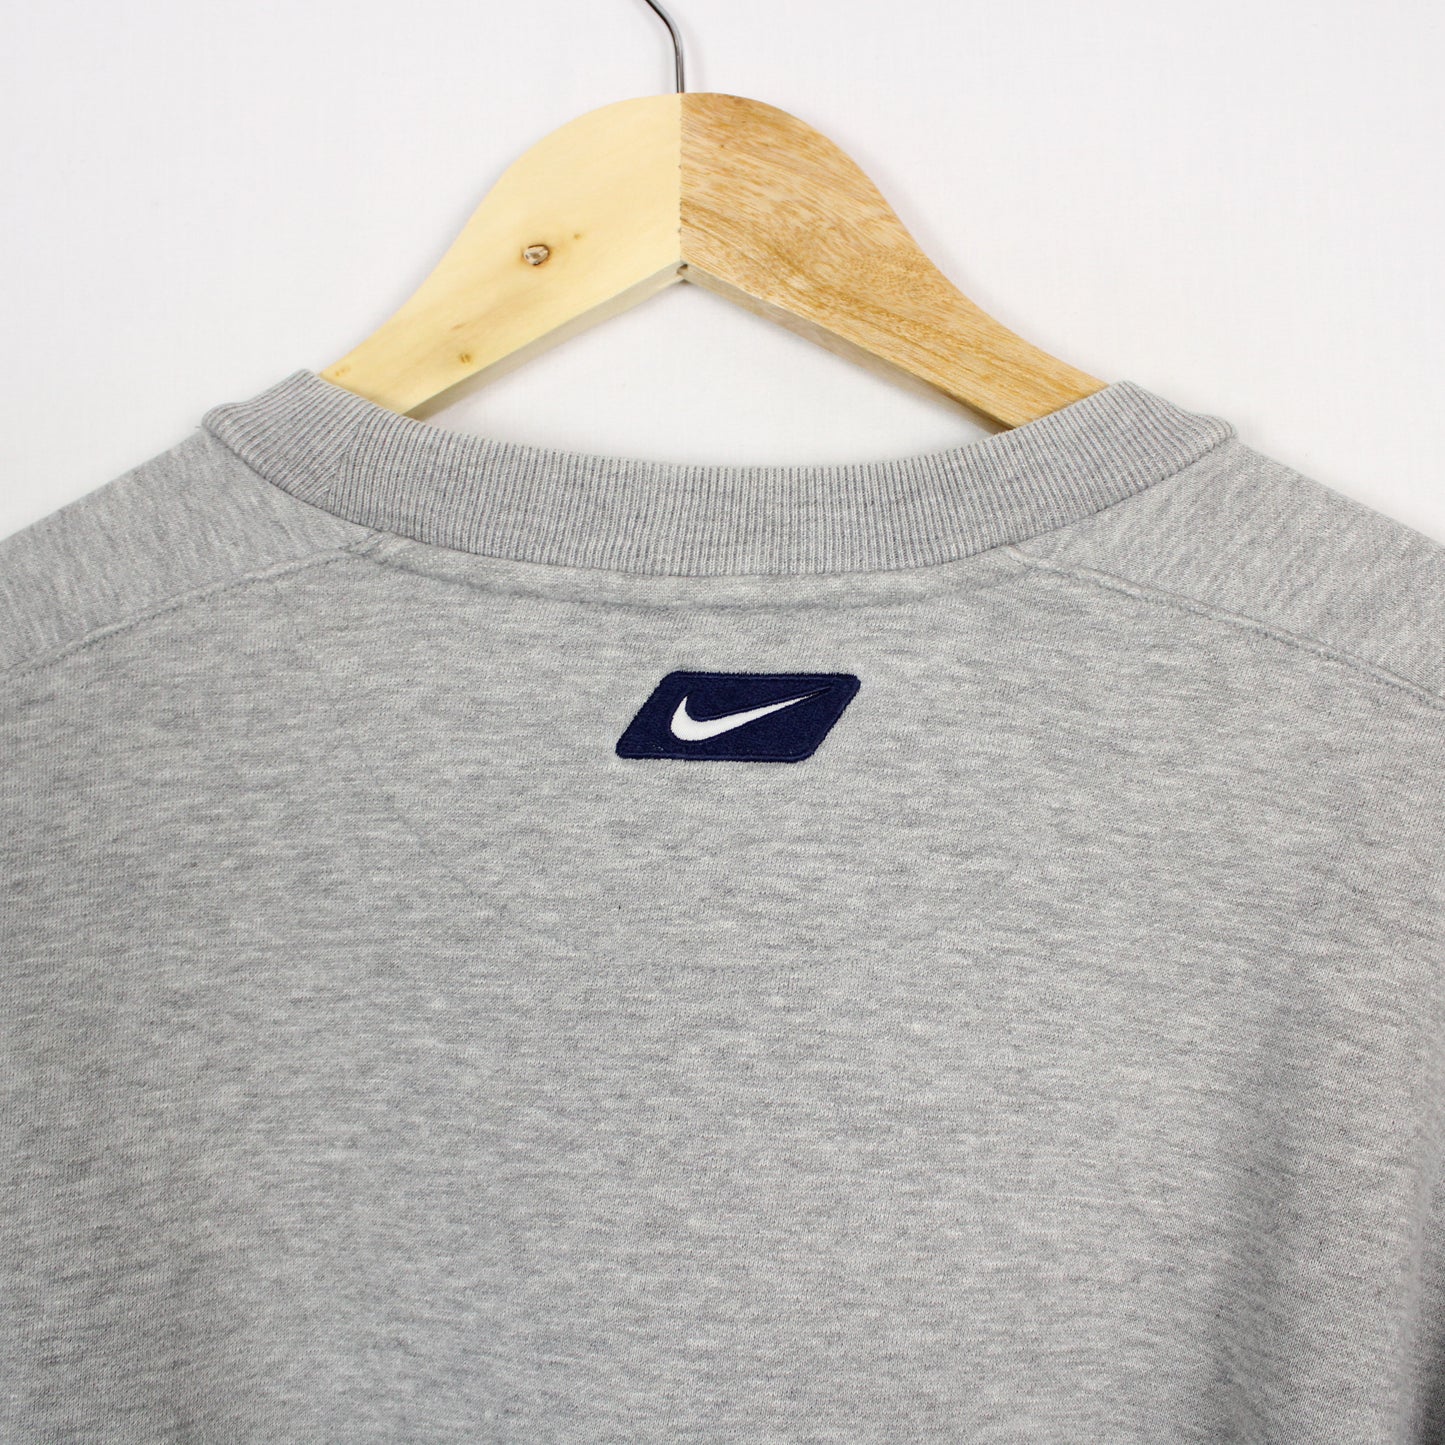 Vintage Nike Spellout Sweatshirt - M